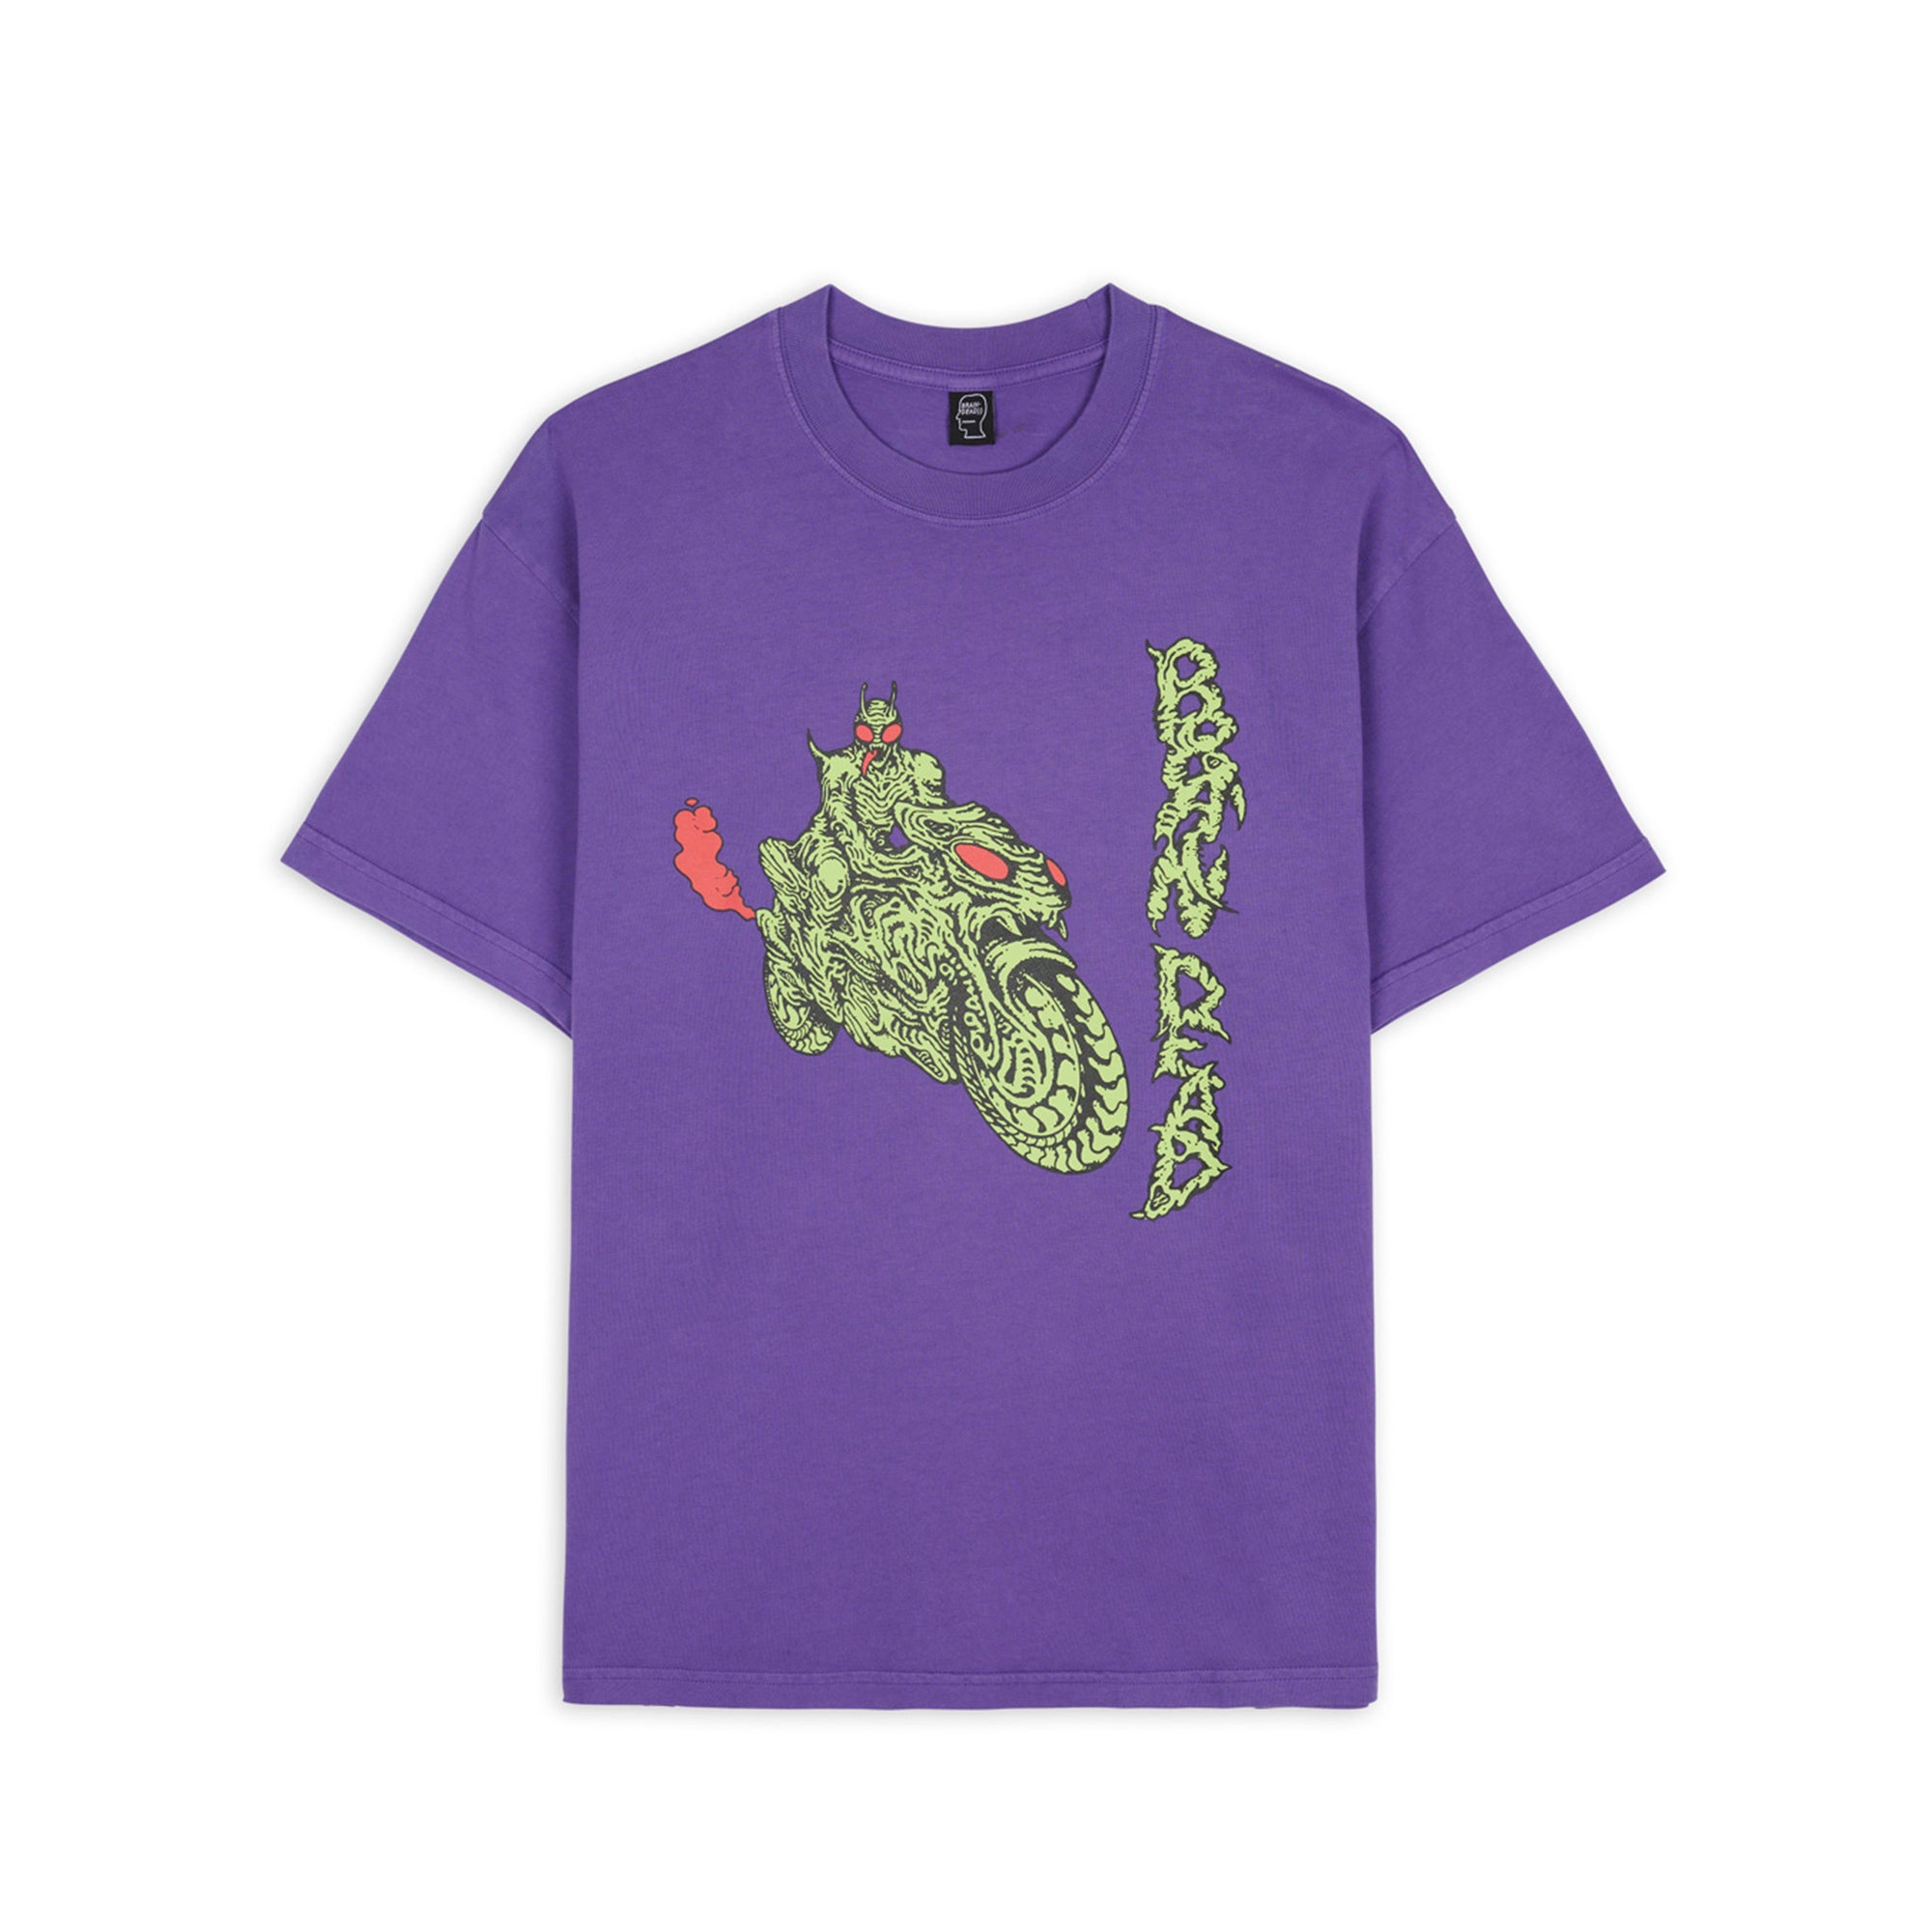 Brain Dead - Men’s Goon Rider T-Shirt - (Purple) view 1